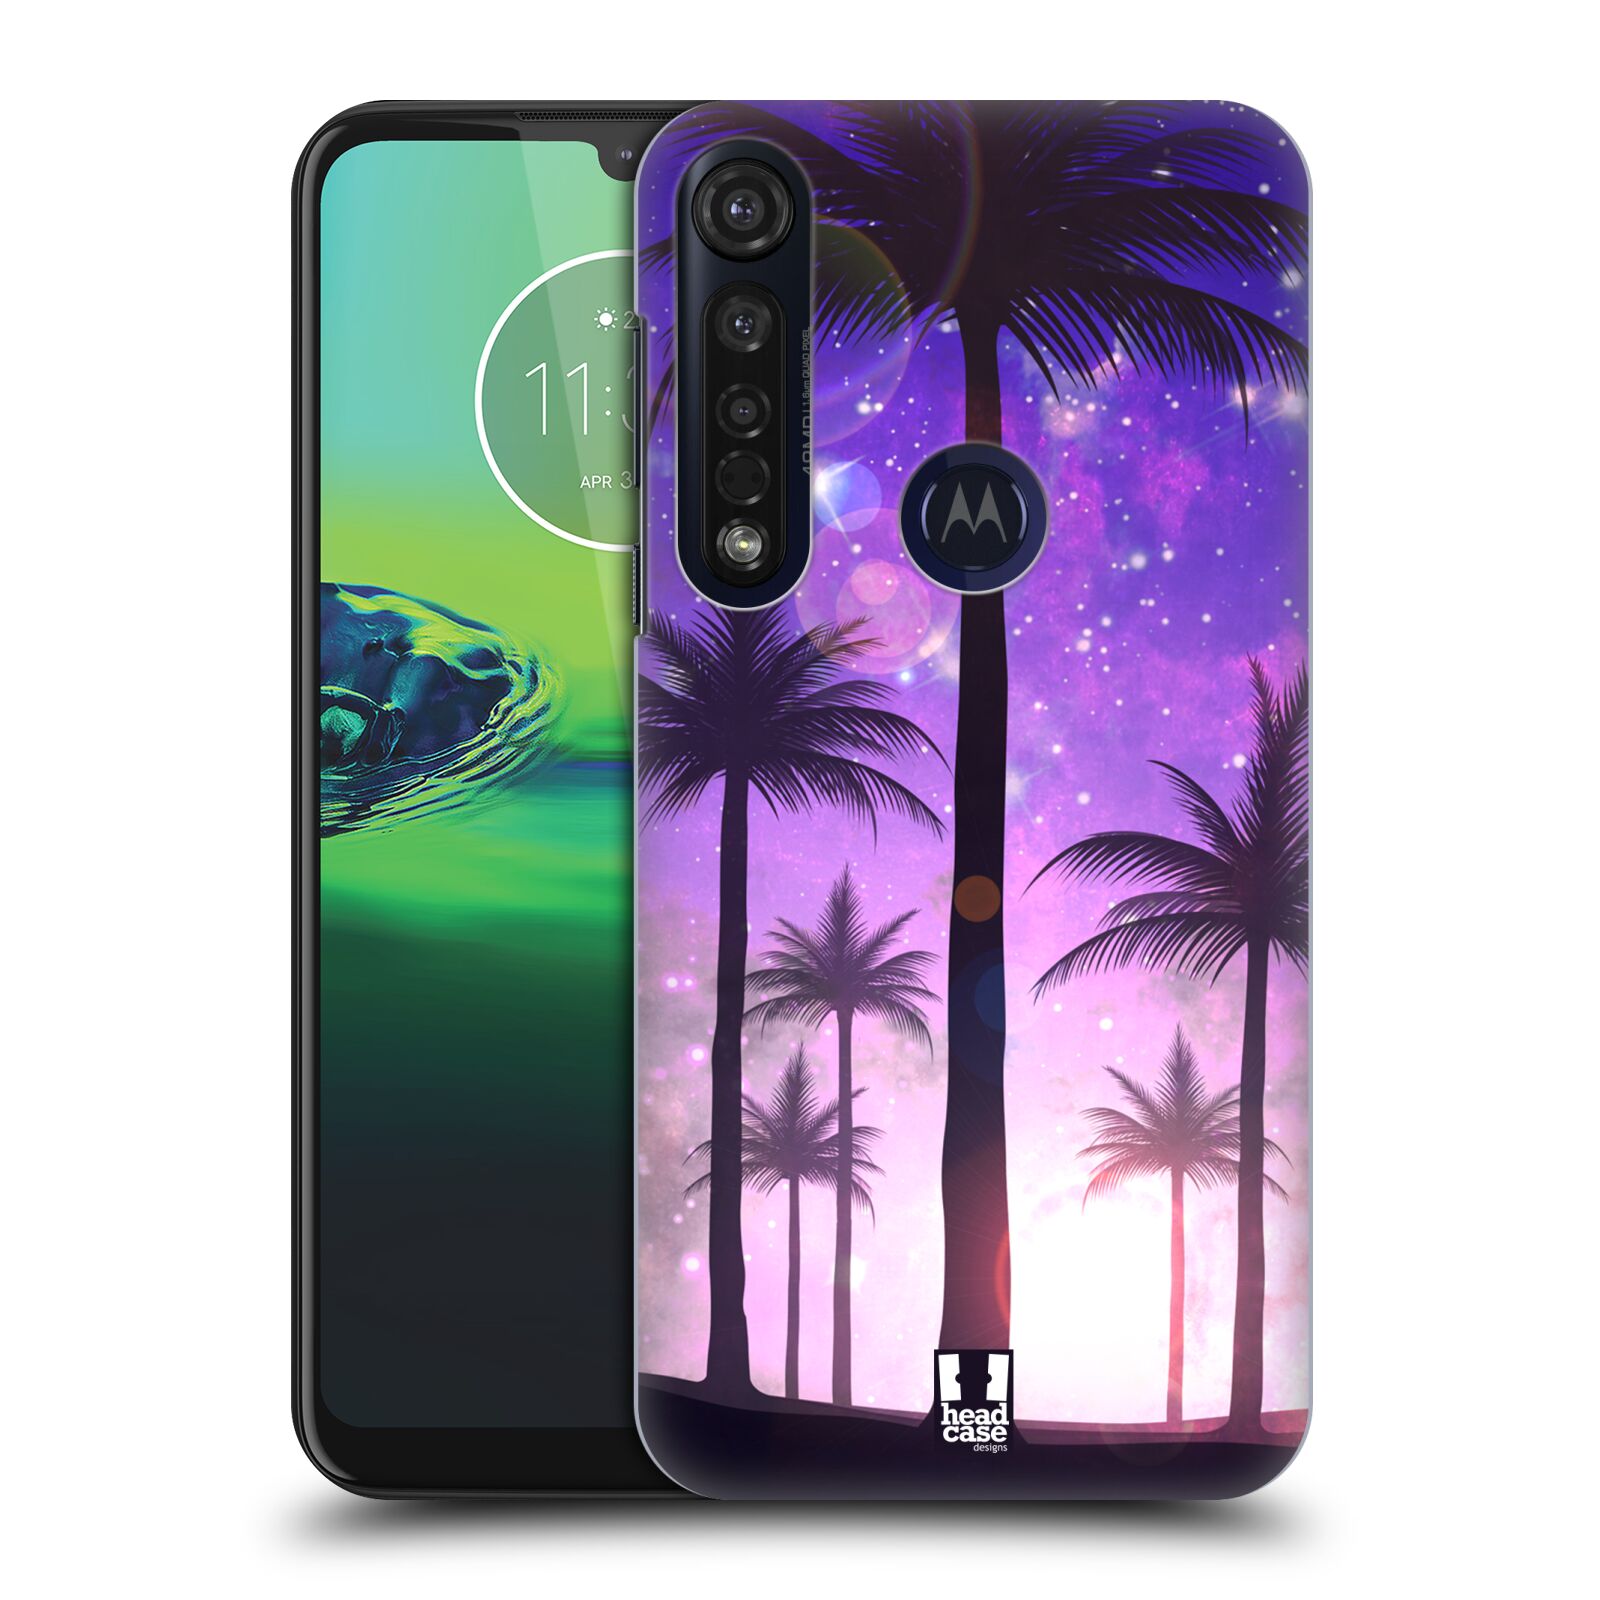 Pouzdro na mobil Motorola Moto G8 PLUS - HEAD CASE - vzor Kreslený motiv silueta moře a palmy FIALOVÁ